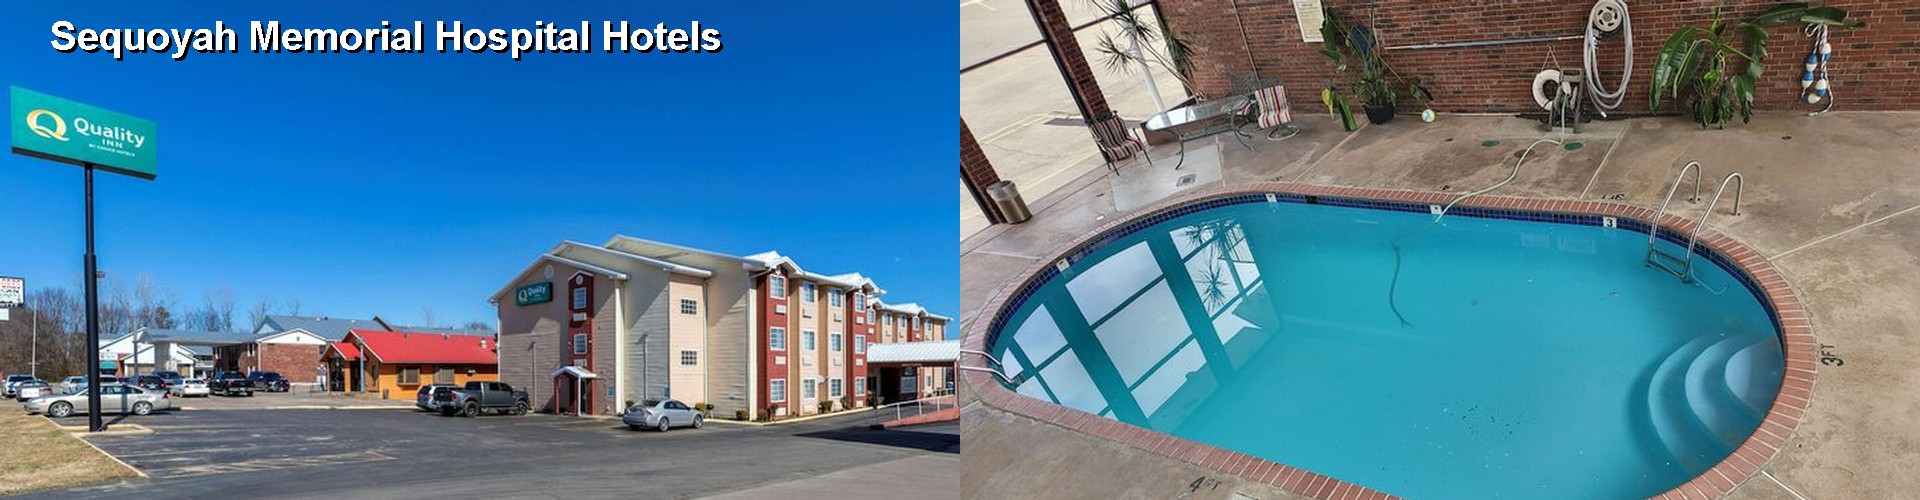 4 Best Hotels near Sequoyah Memorial Hospital